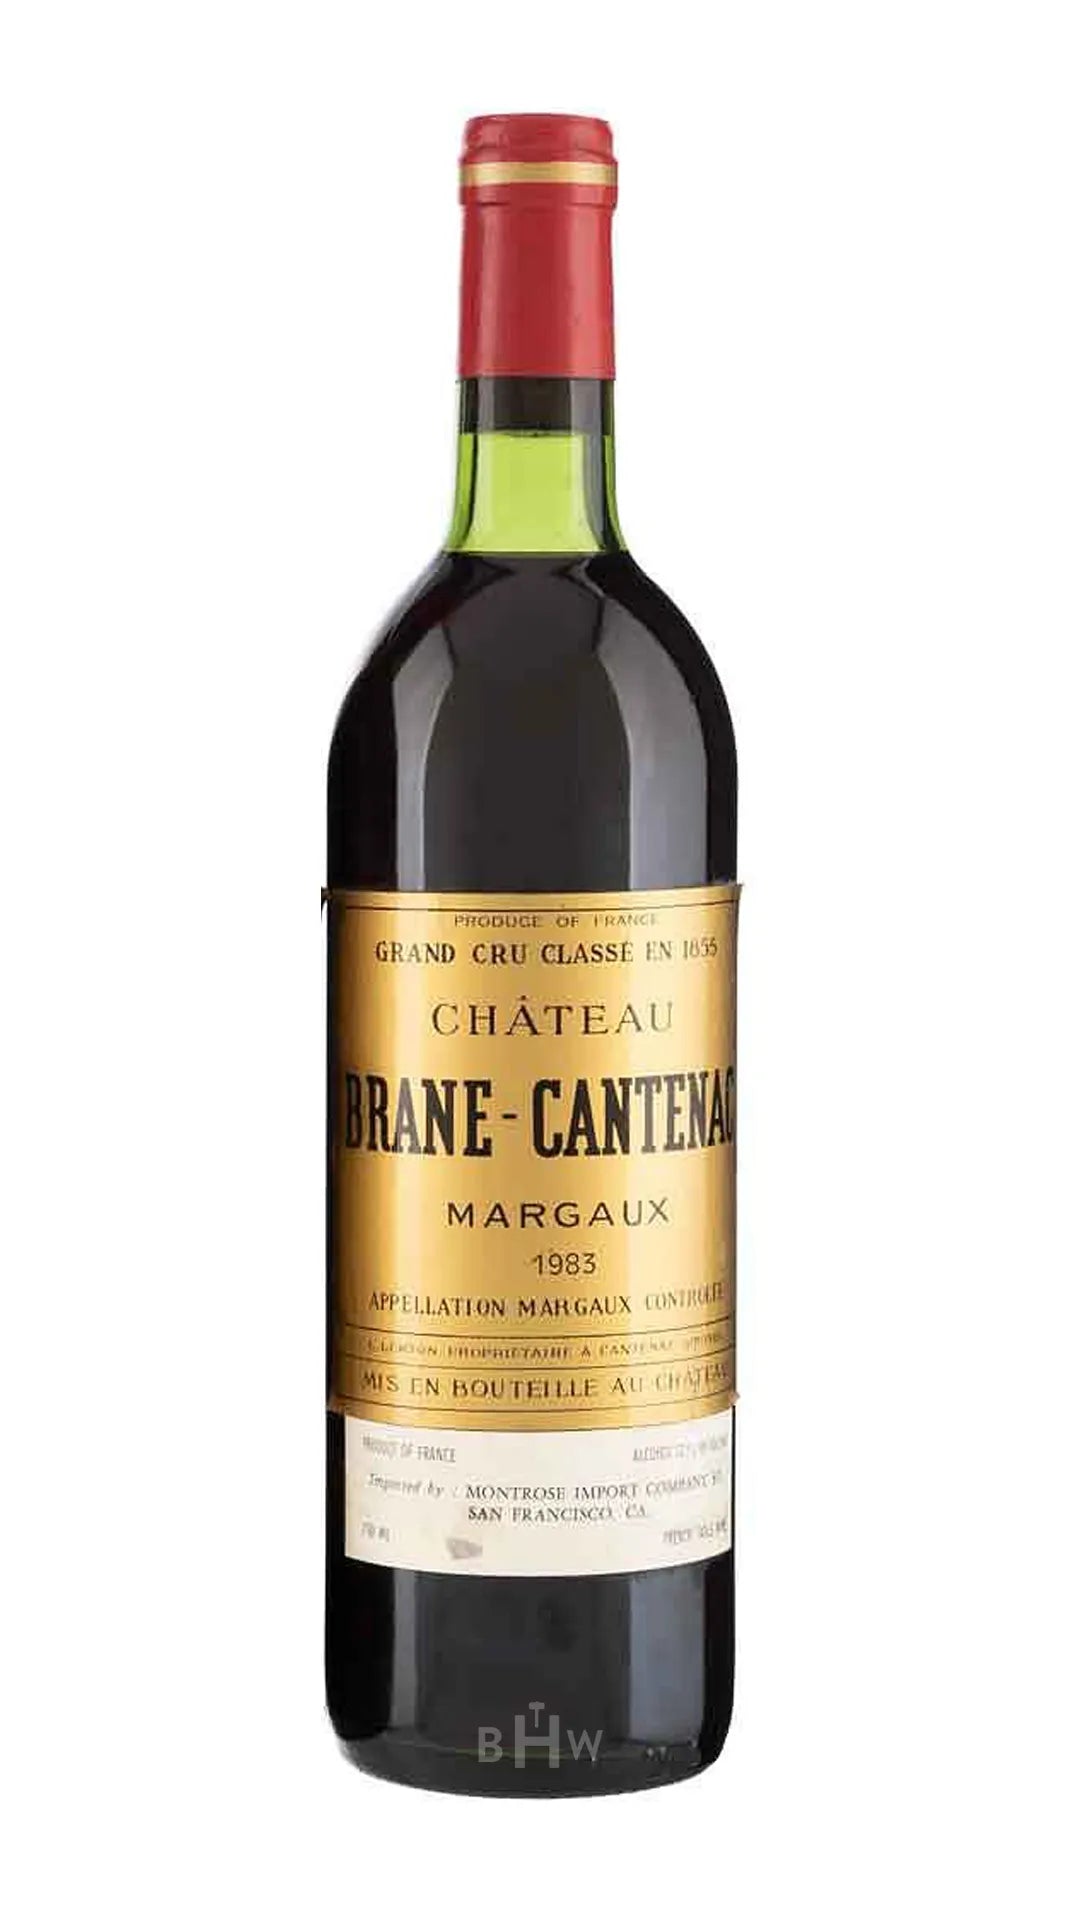 1983 Chateau Brane-Cantenac Margaux 3rd Growth